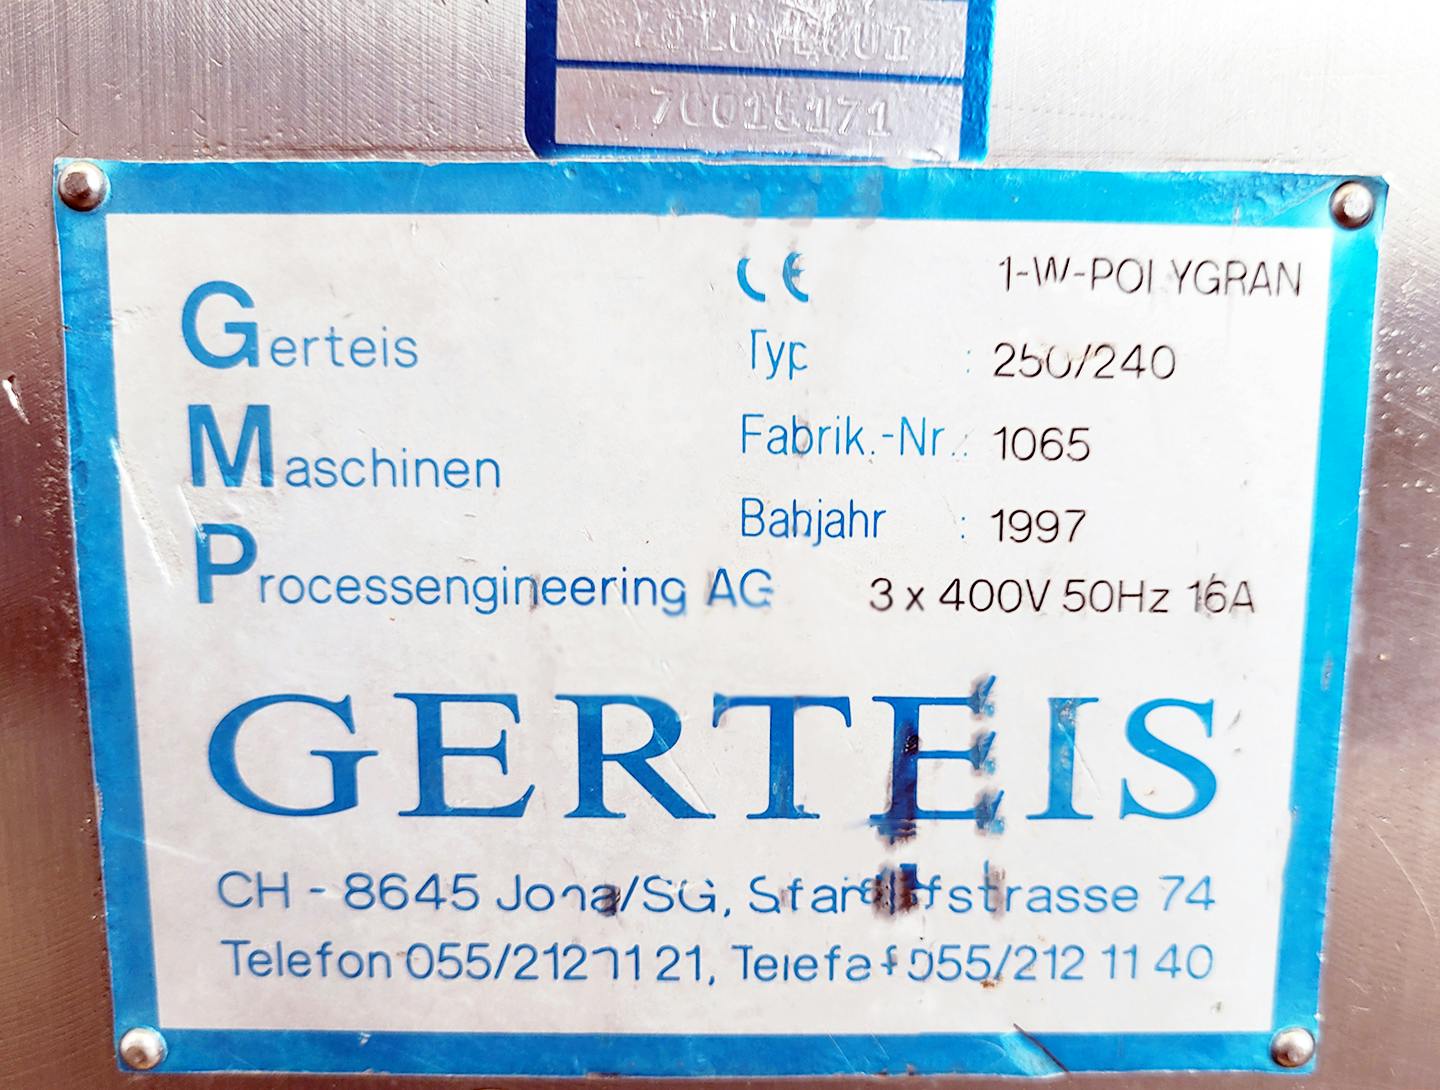 Gerteis 1-W-Polygran 250/240 - Granulator sitowy - image 18